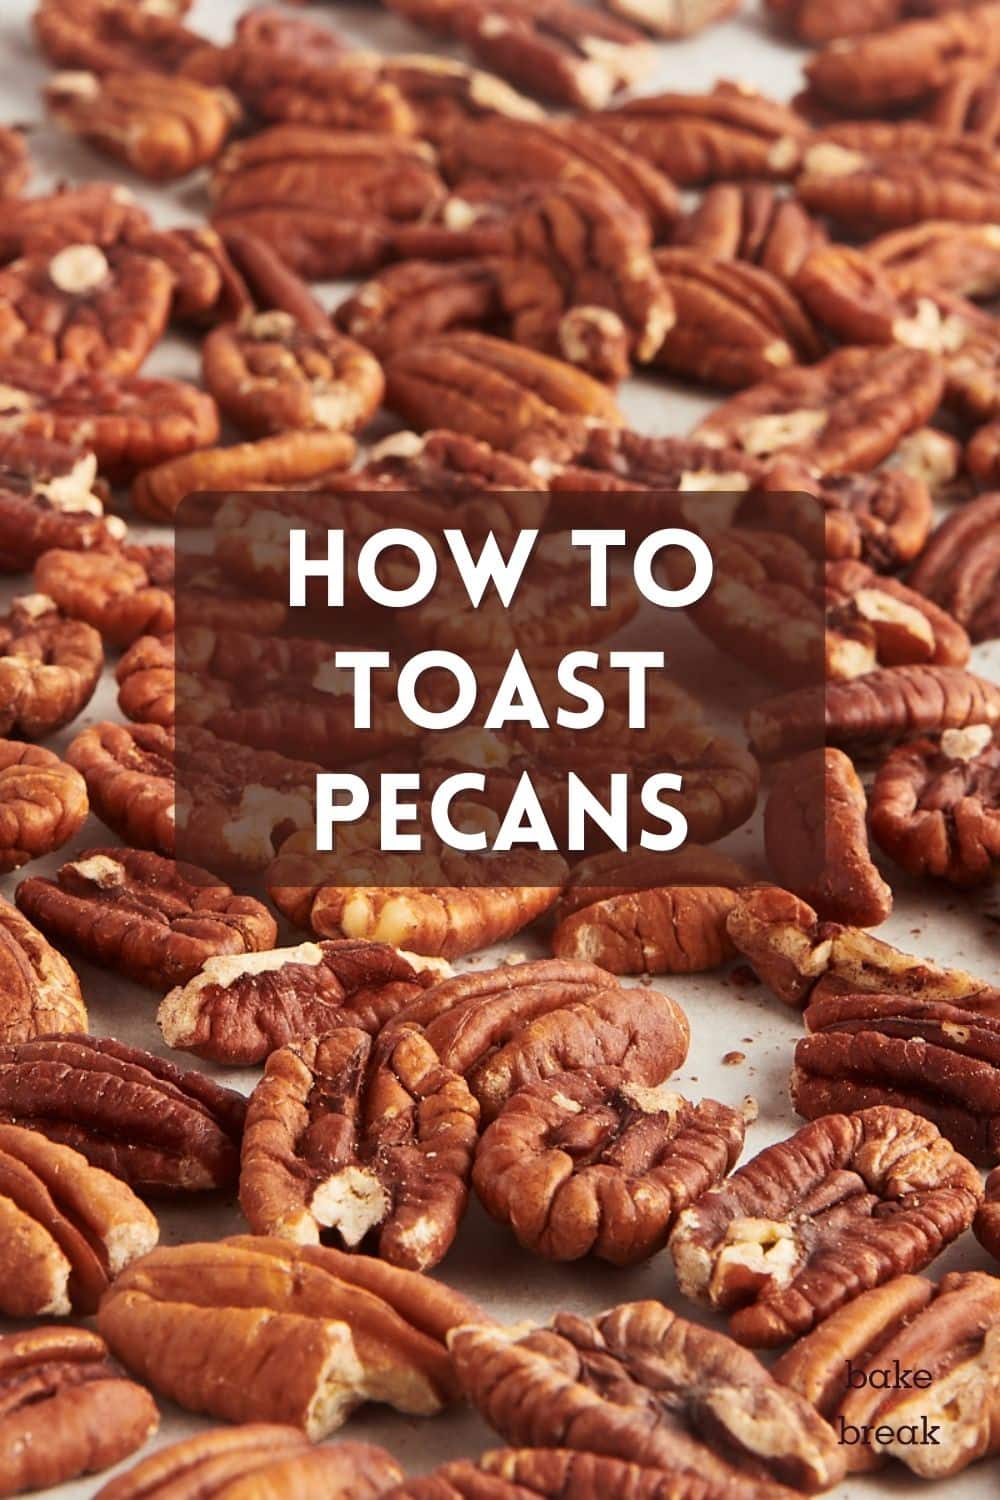 How to Toast Pecans bake or break